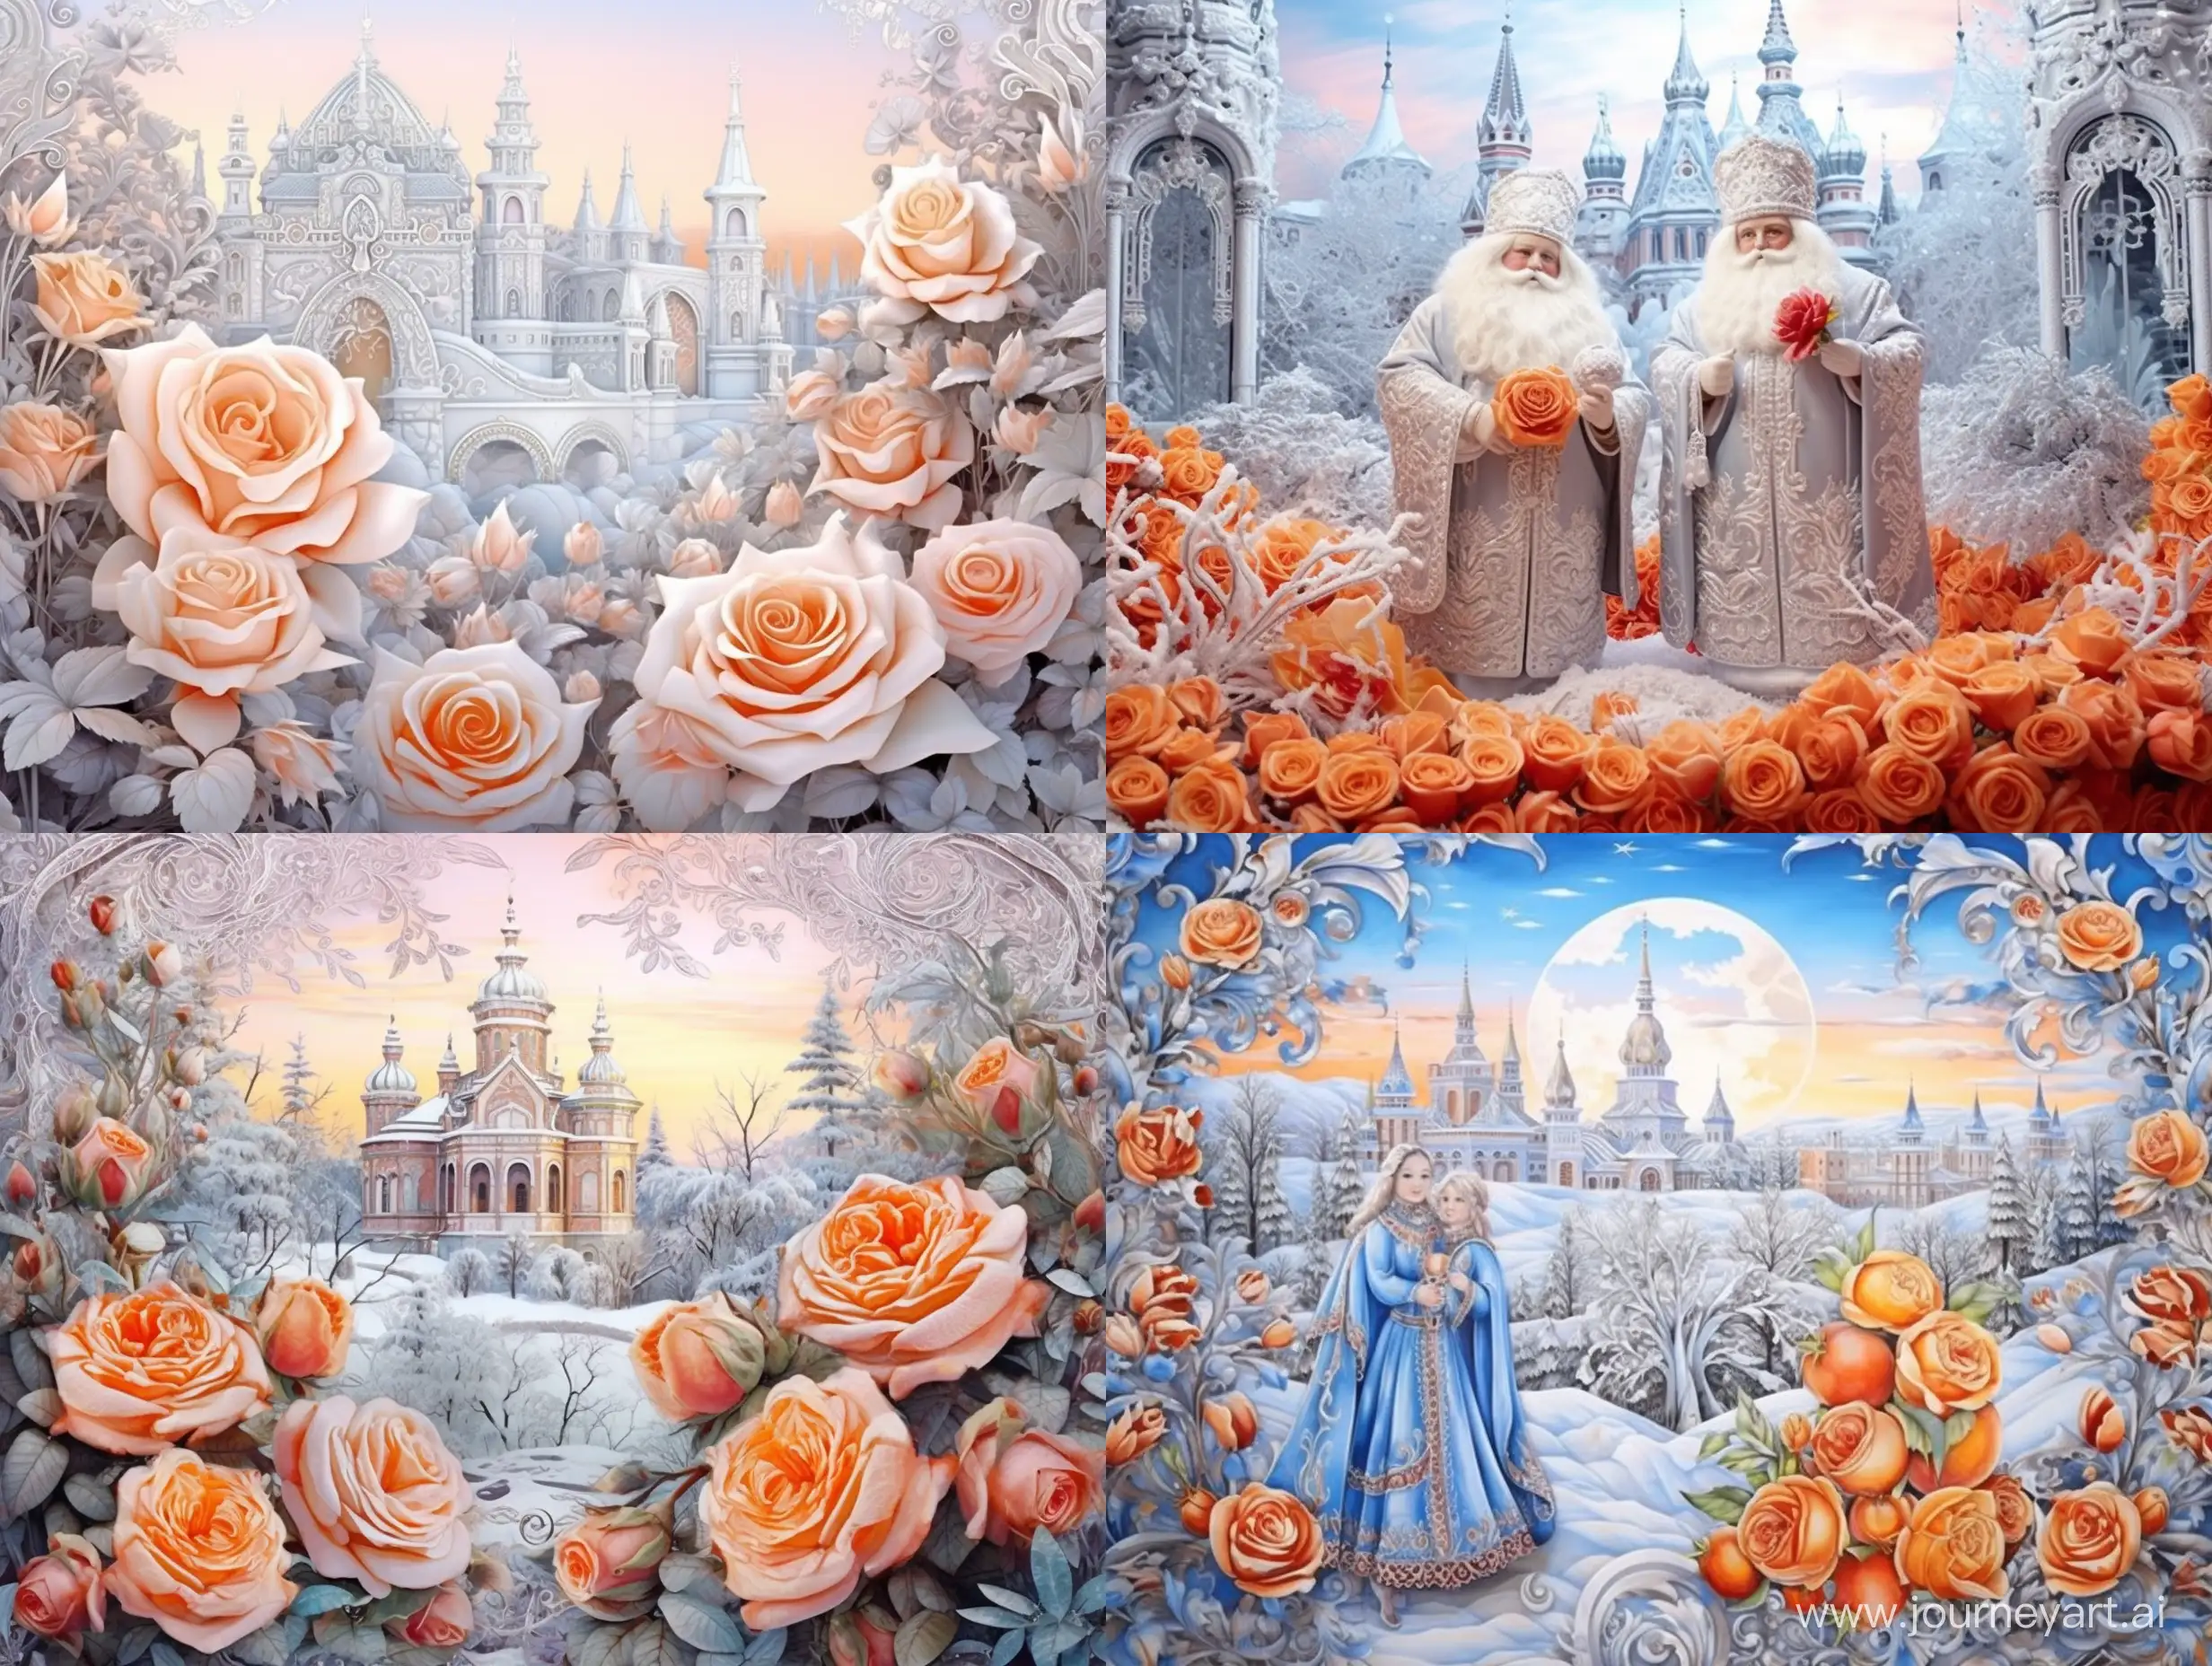 Enchanting-Winter-Scene-with-Ded-Moroz-Snegurochka-and-Festive-Mandarins